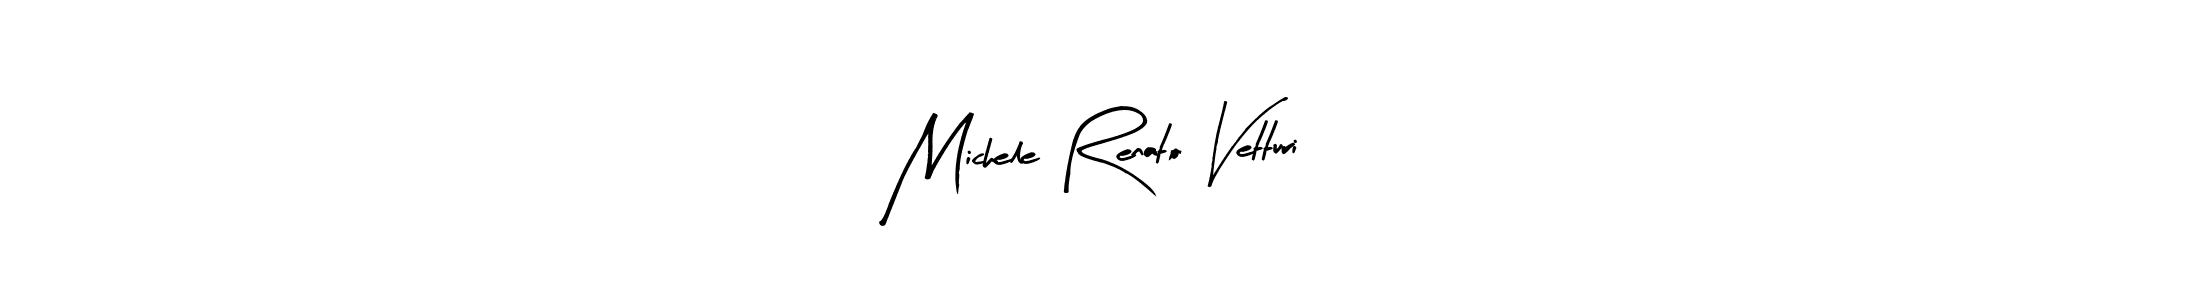 How to Draw Michele Renato Vetturi signature style? Arty Signature is a latest design signature styles for name Michele Renato Vetturi. Michele Renato Vetturi signature style 8 images and pictures png